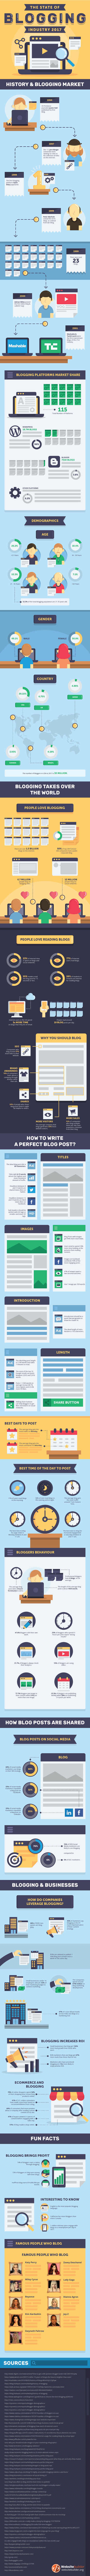 16 Infographic blogging